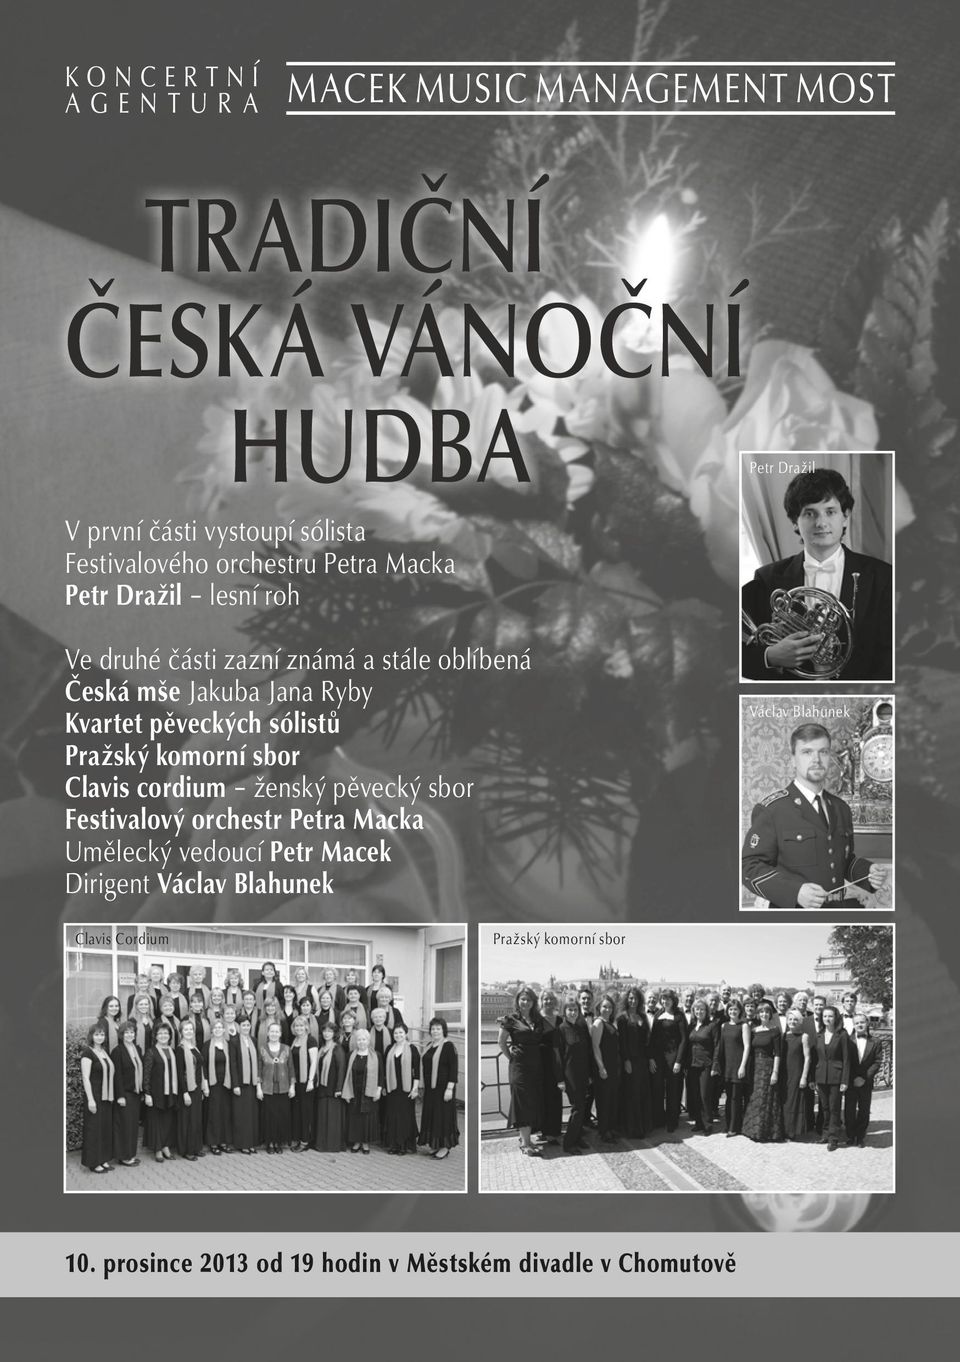 Kvartet pěveckých sólistů Pražský komorní sbor Clavis cordium ženský pěvecký sbor Dirigent Václav